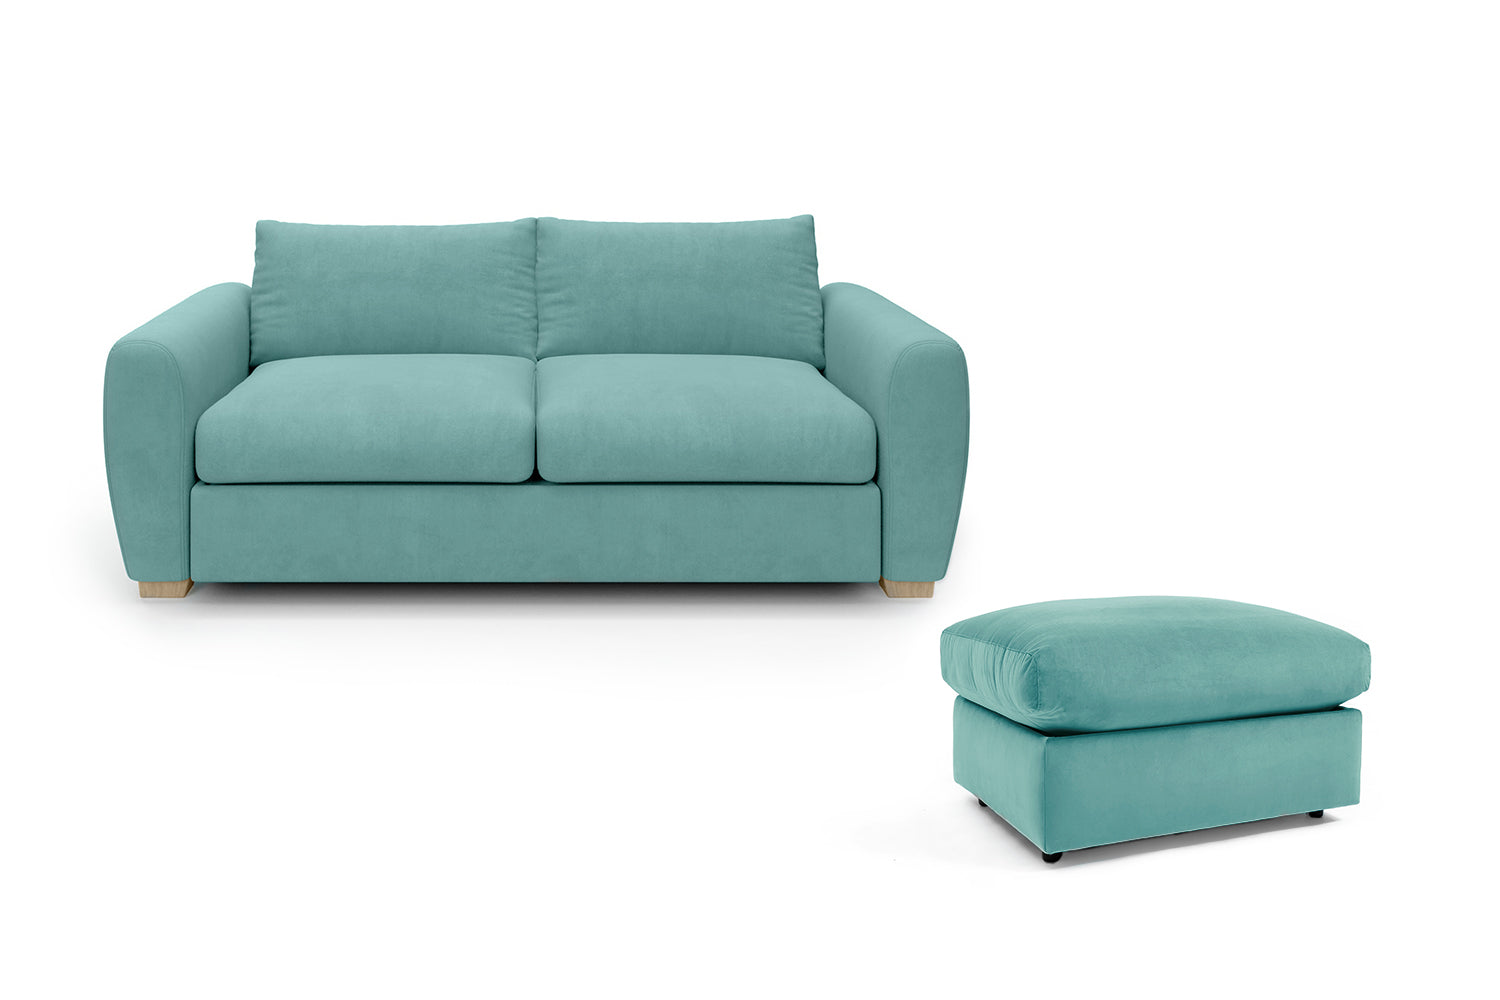 The Cloud Sundae - 3 Seater Sofa and Footstool Set - Soft Teal